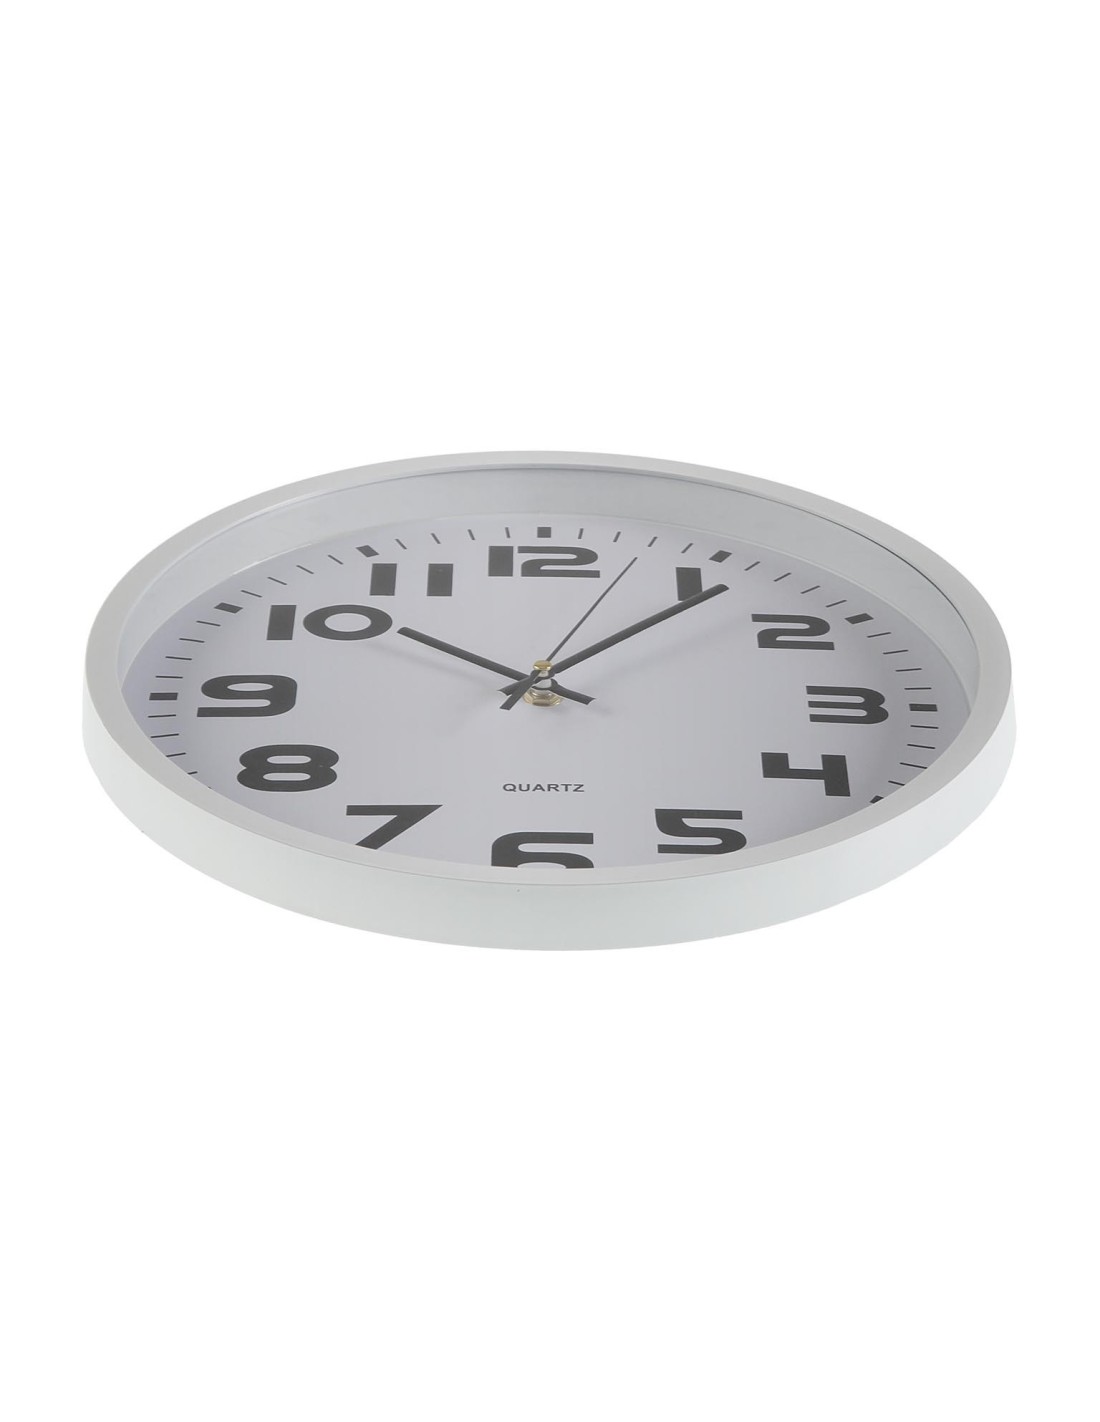 https://deseosdetalles.com/13581-thickbox_default/reloj-cocina-blanco-305-cm.jpg